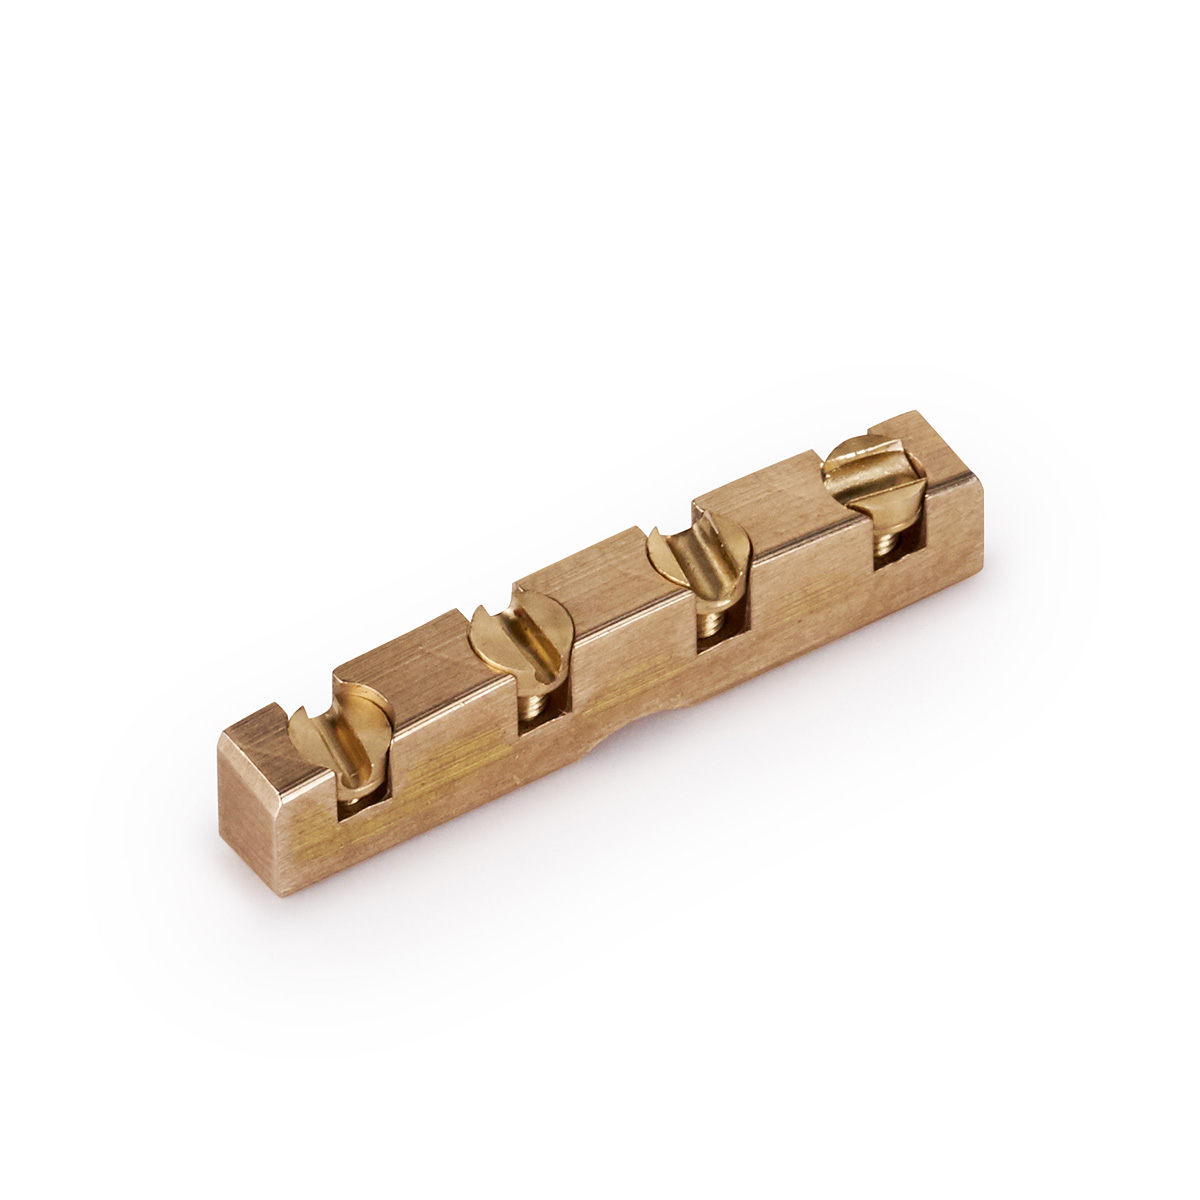 Warwick Parts - Just-A-Nut, 4-String, 40 mm width - Brass